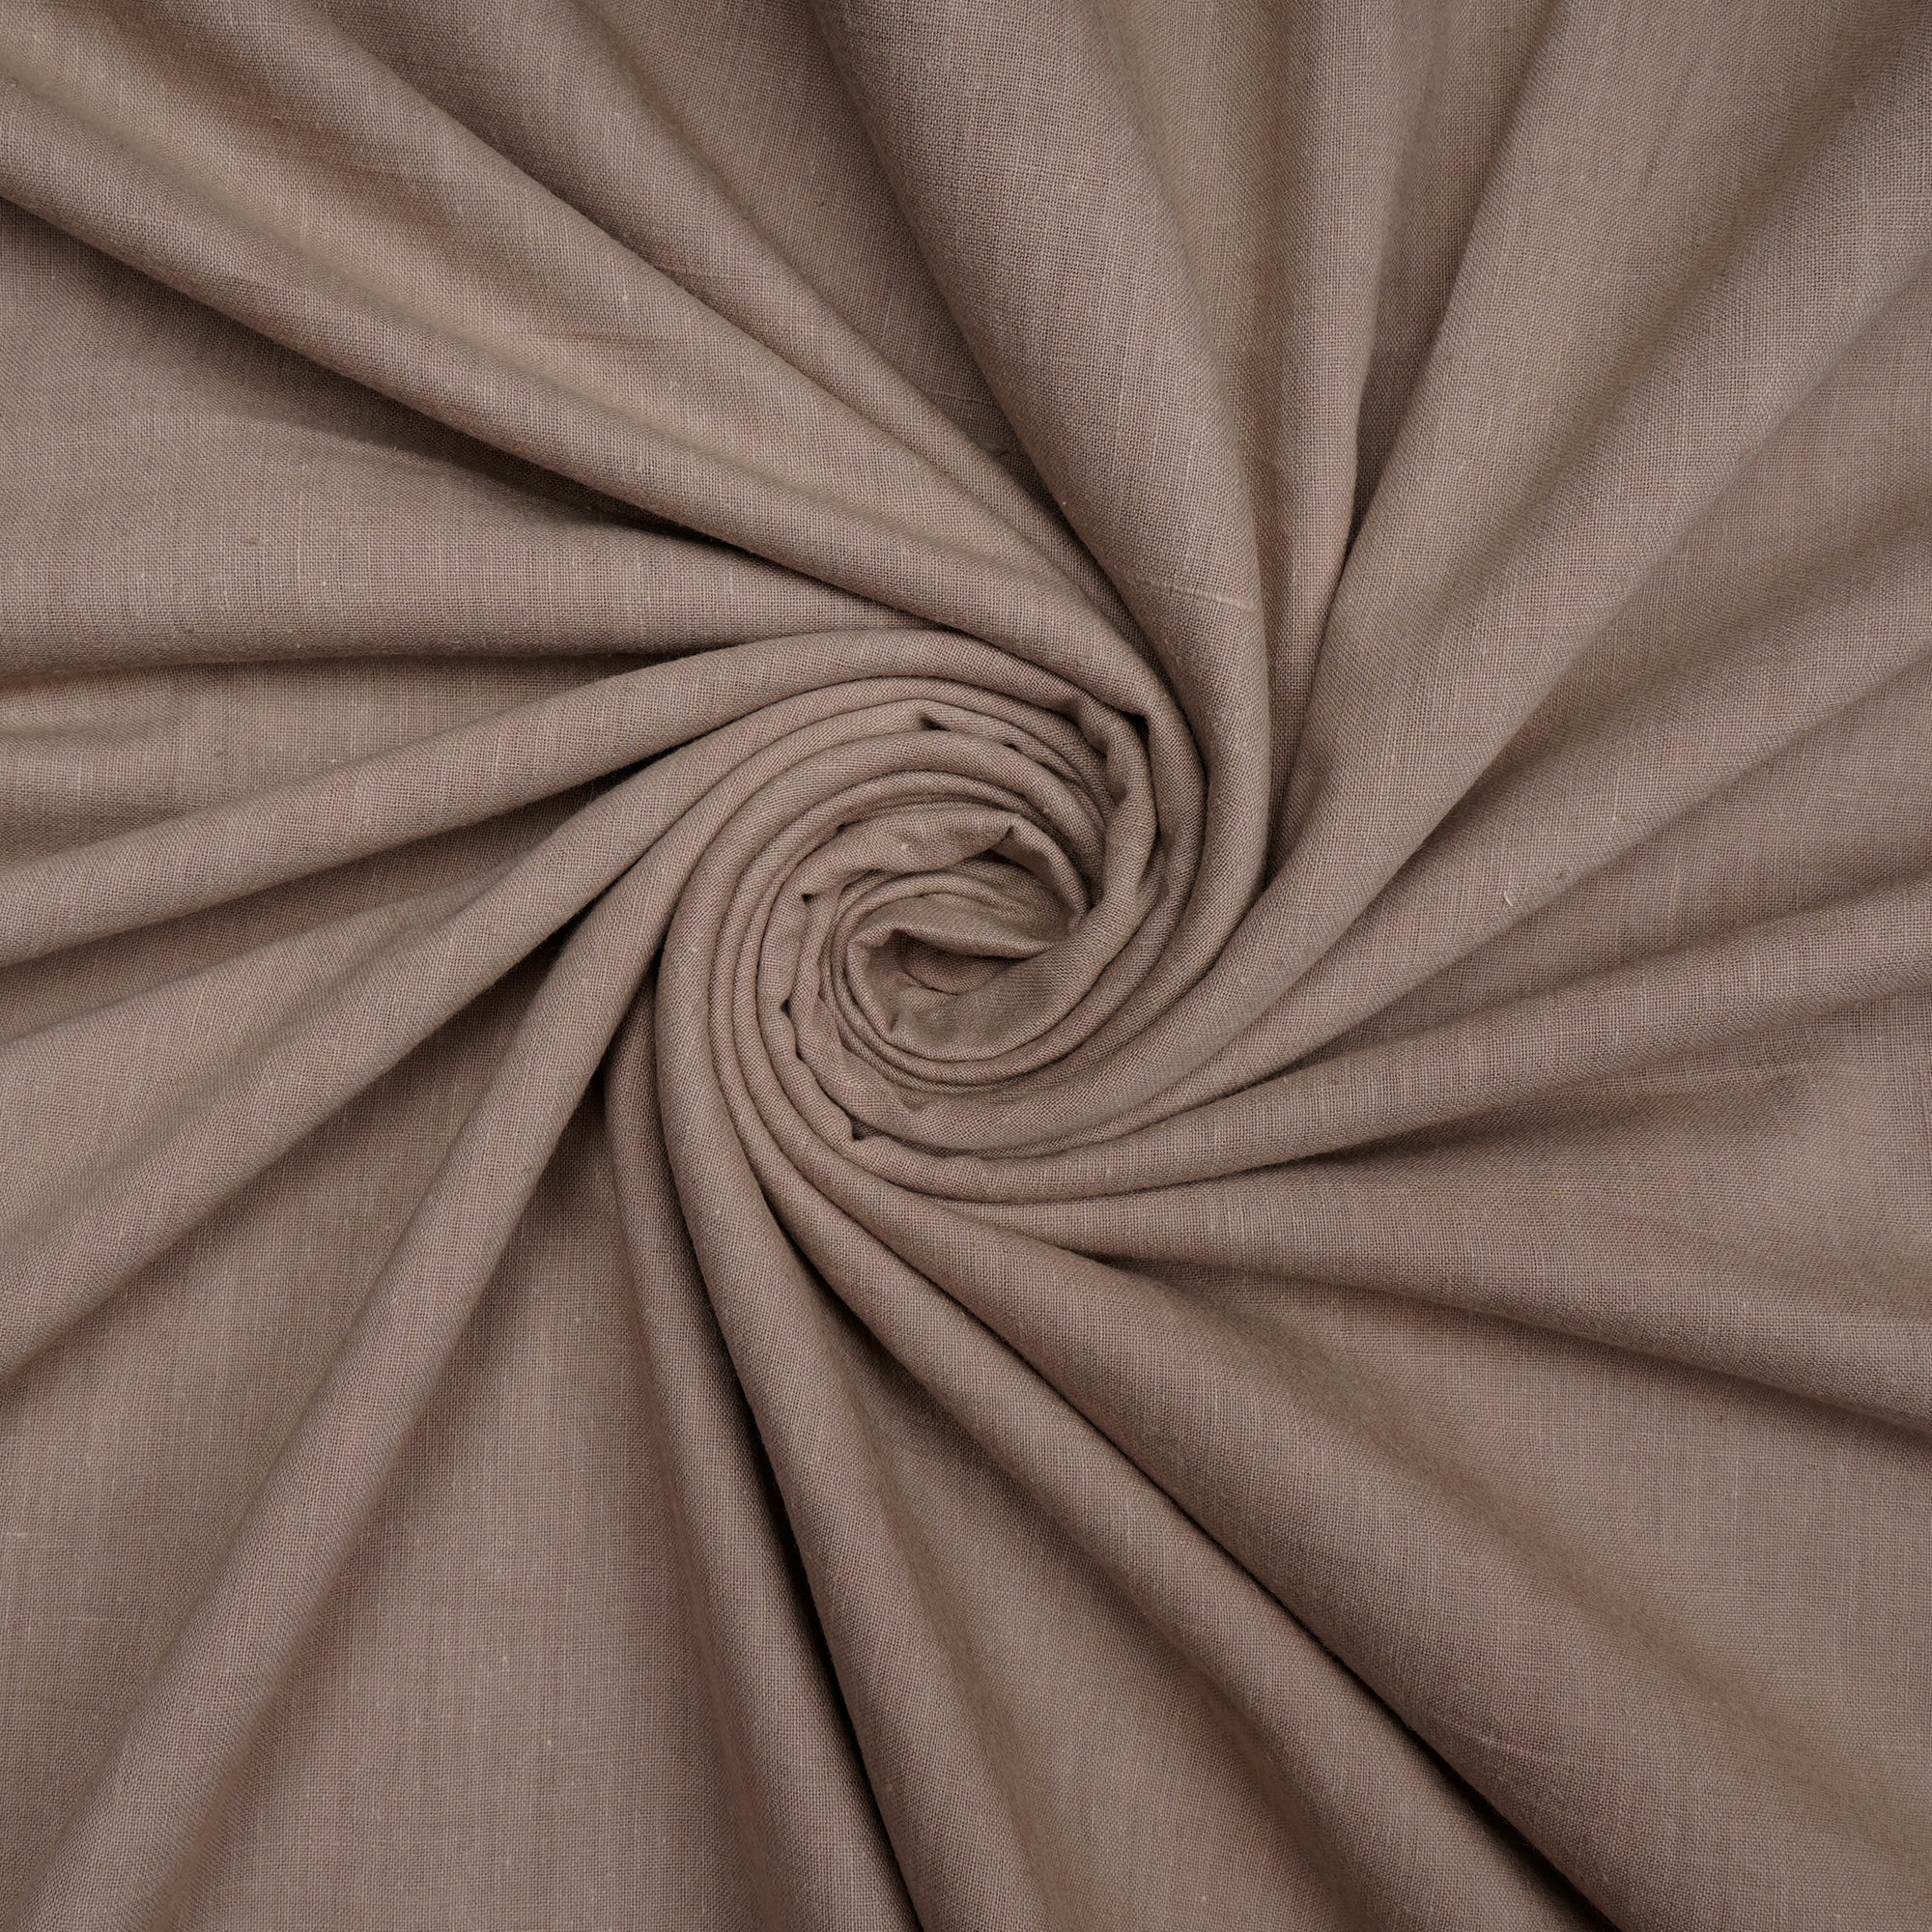 Prefectly Pale Handwoven Handspun Muslin Cotton Fabric